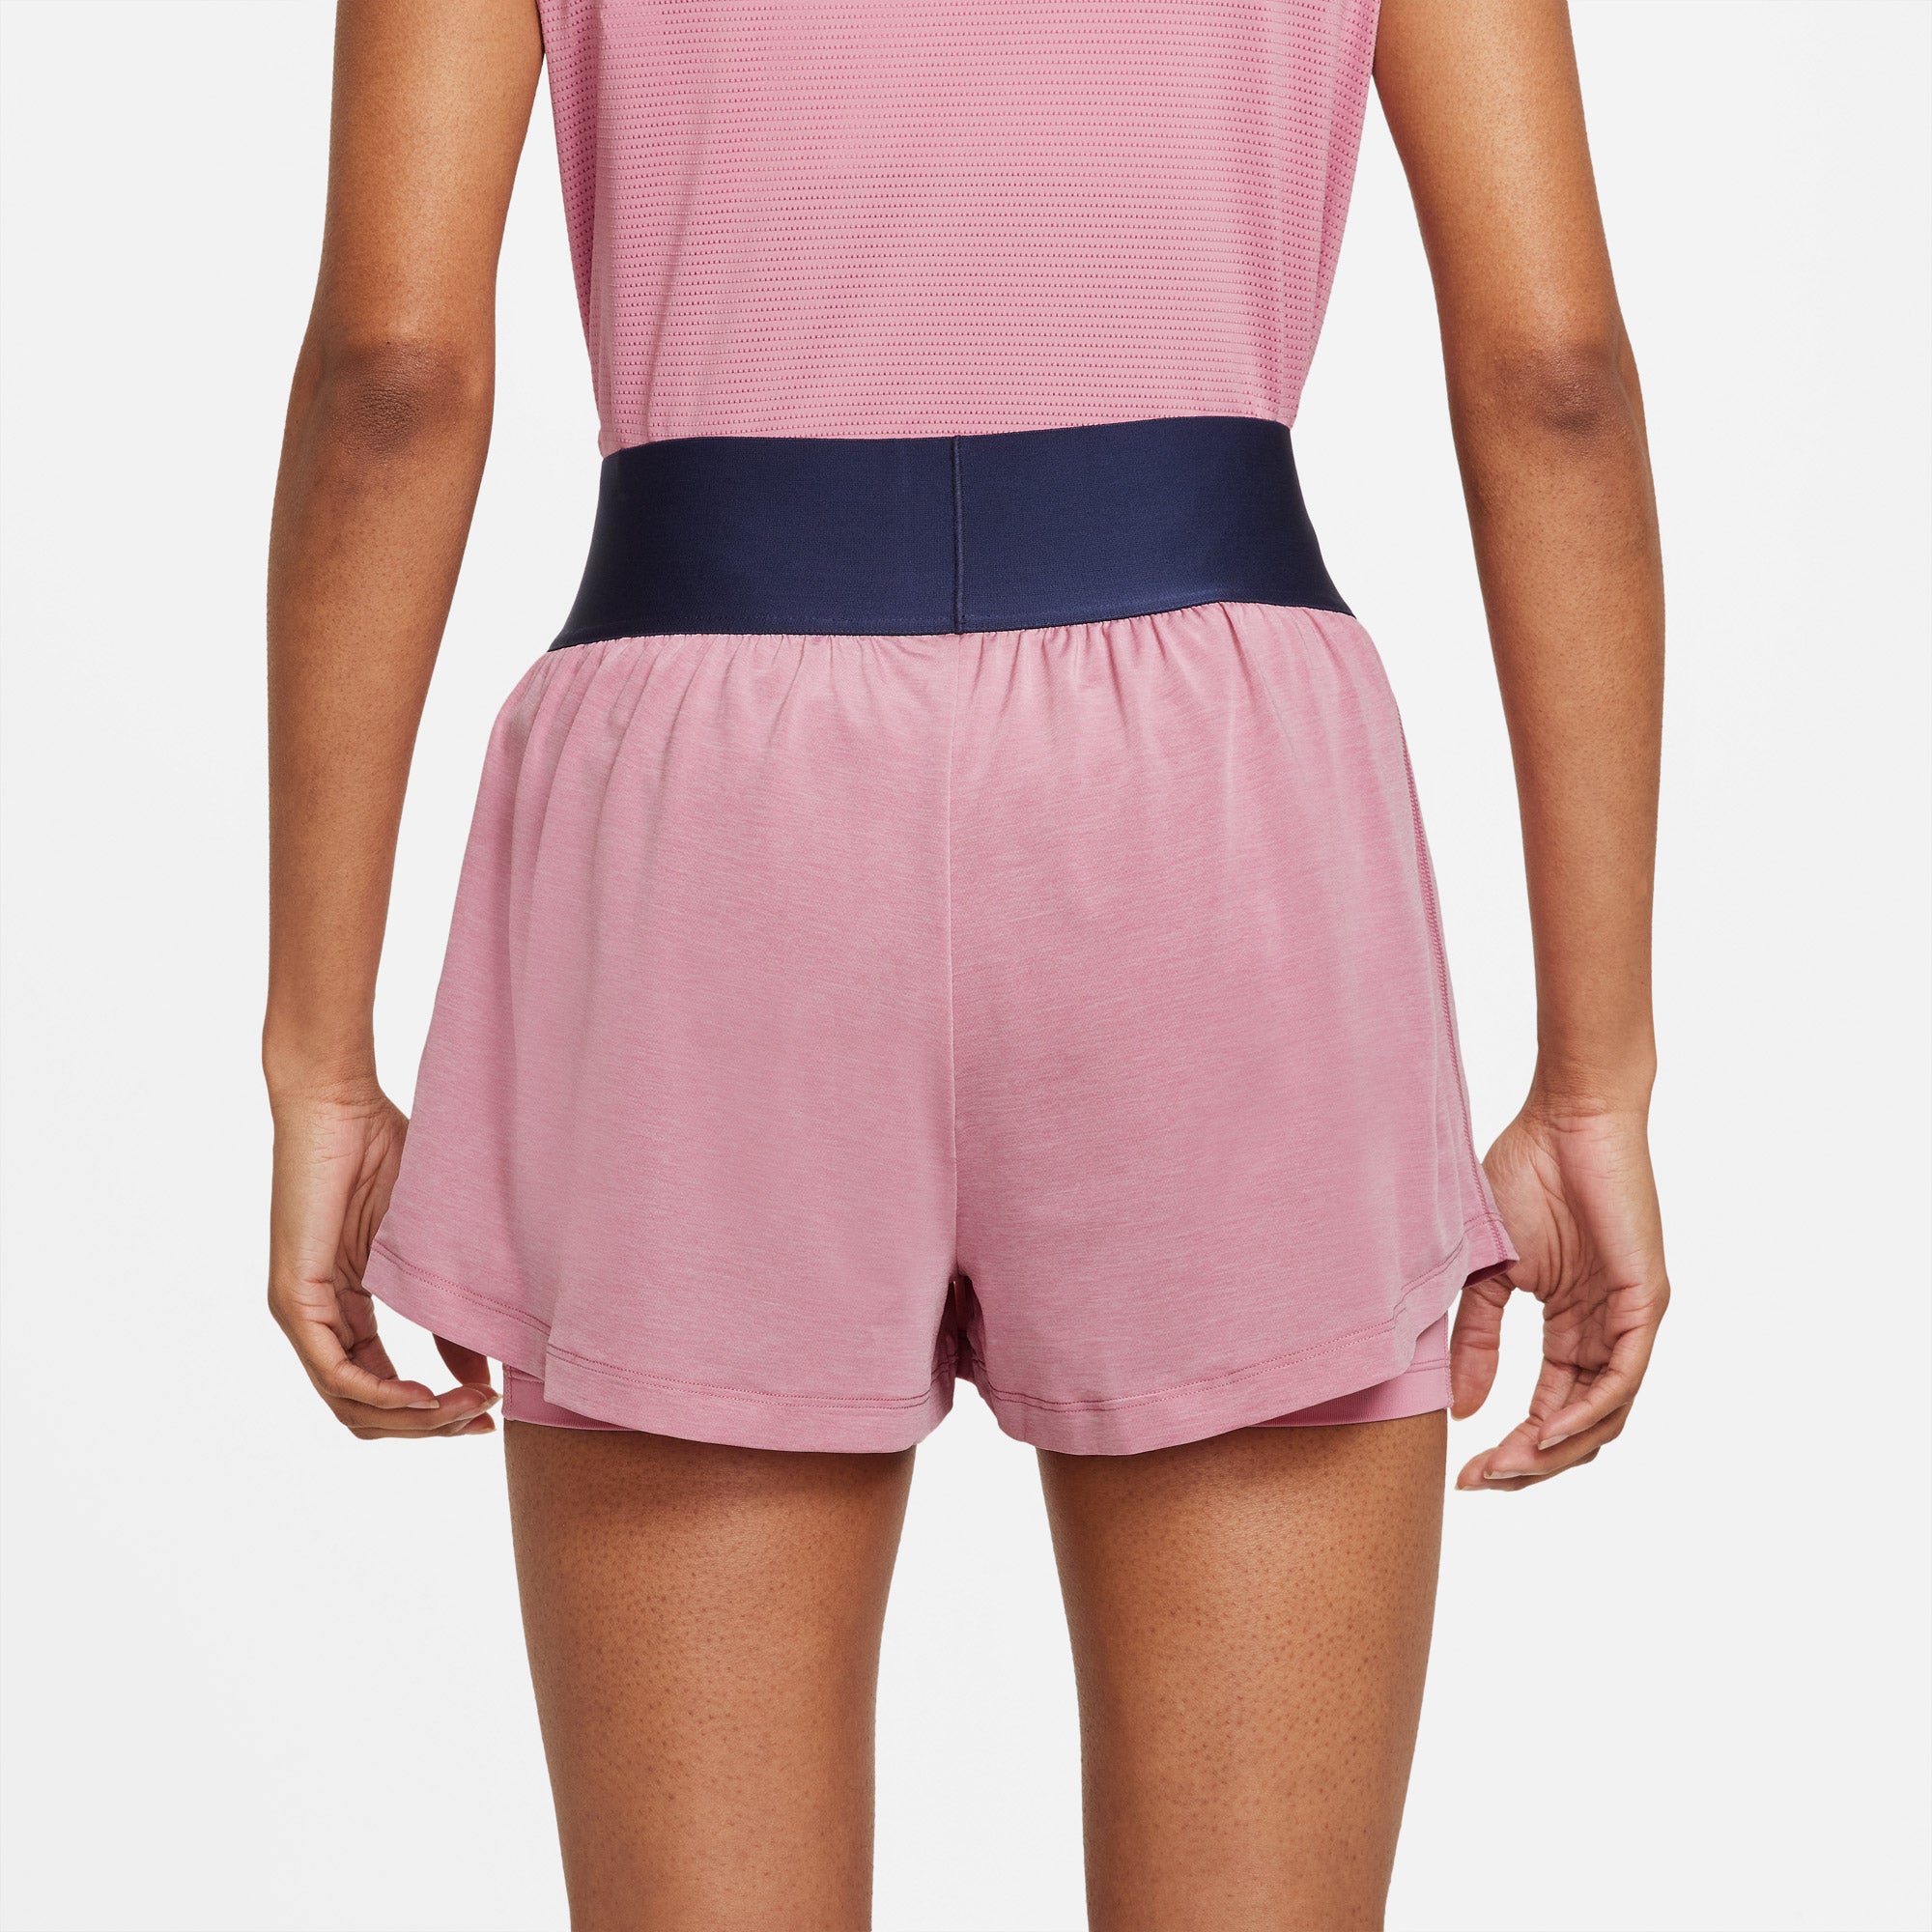 Nike Dri-FIT Advantage Women's Tennis Shorts Pink (2)